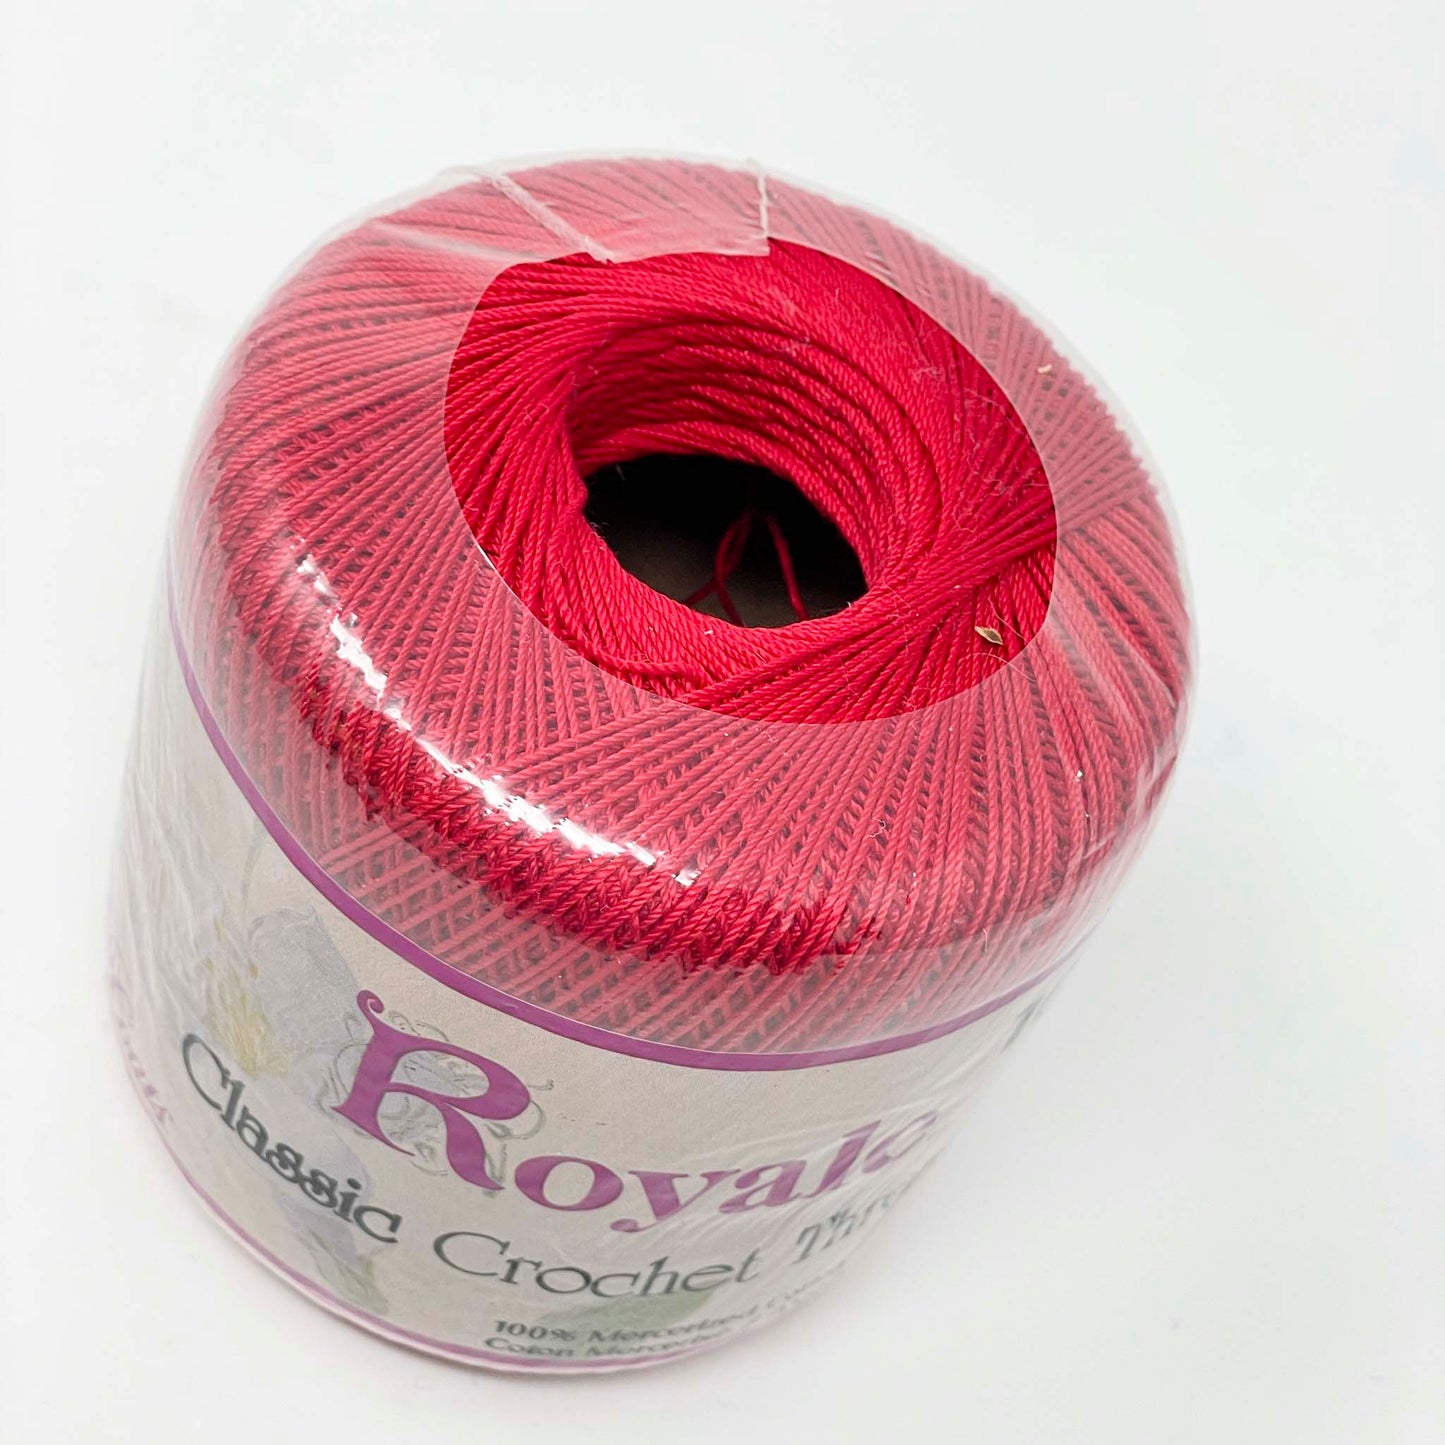 Royale Classic Crochet Thread - Size 10